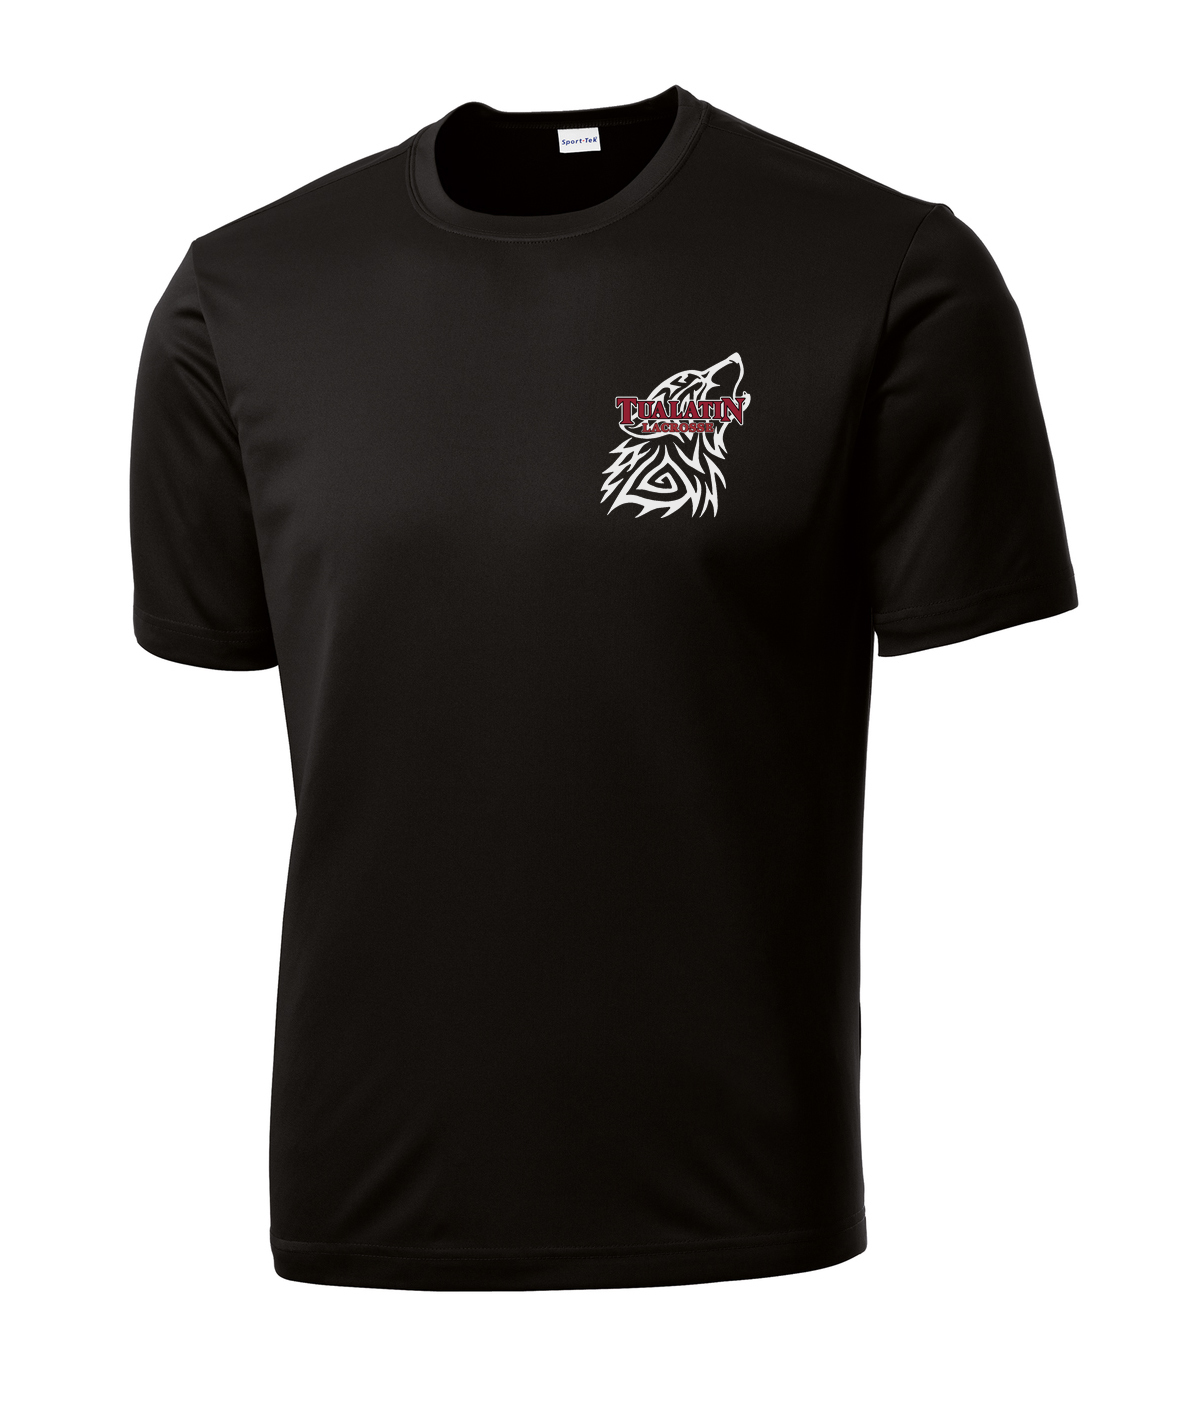 Tualatin Black Performance T-Shirt